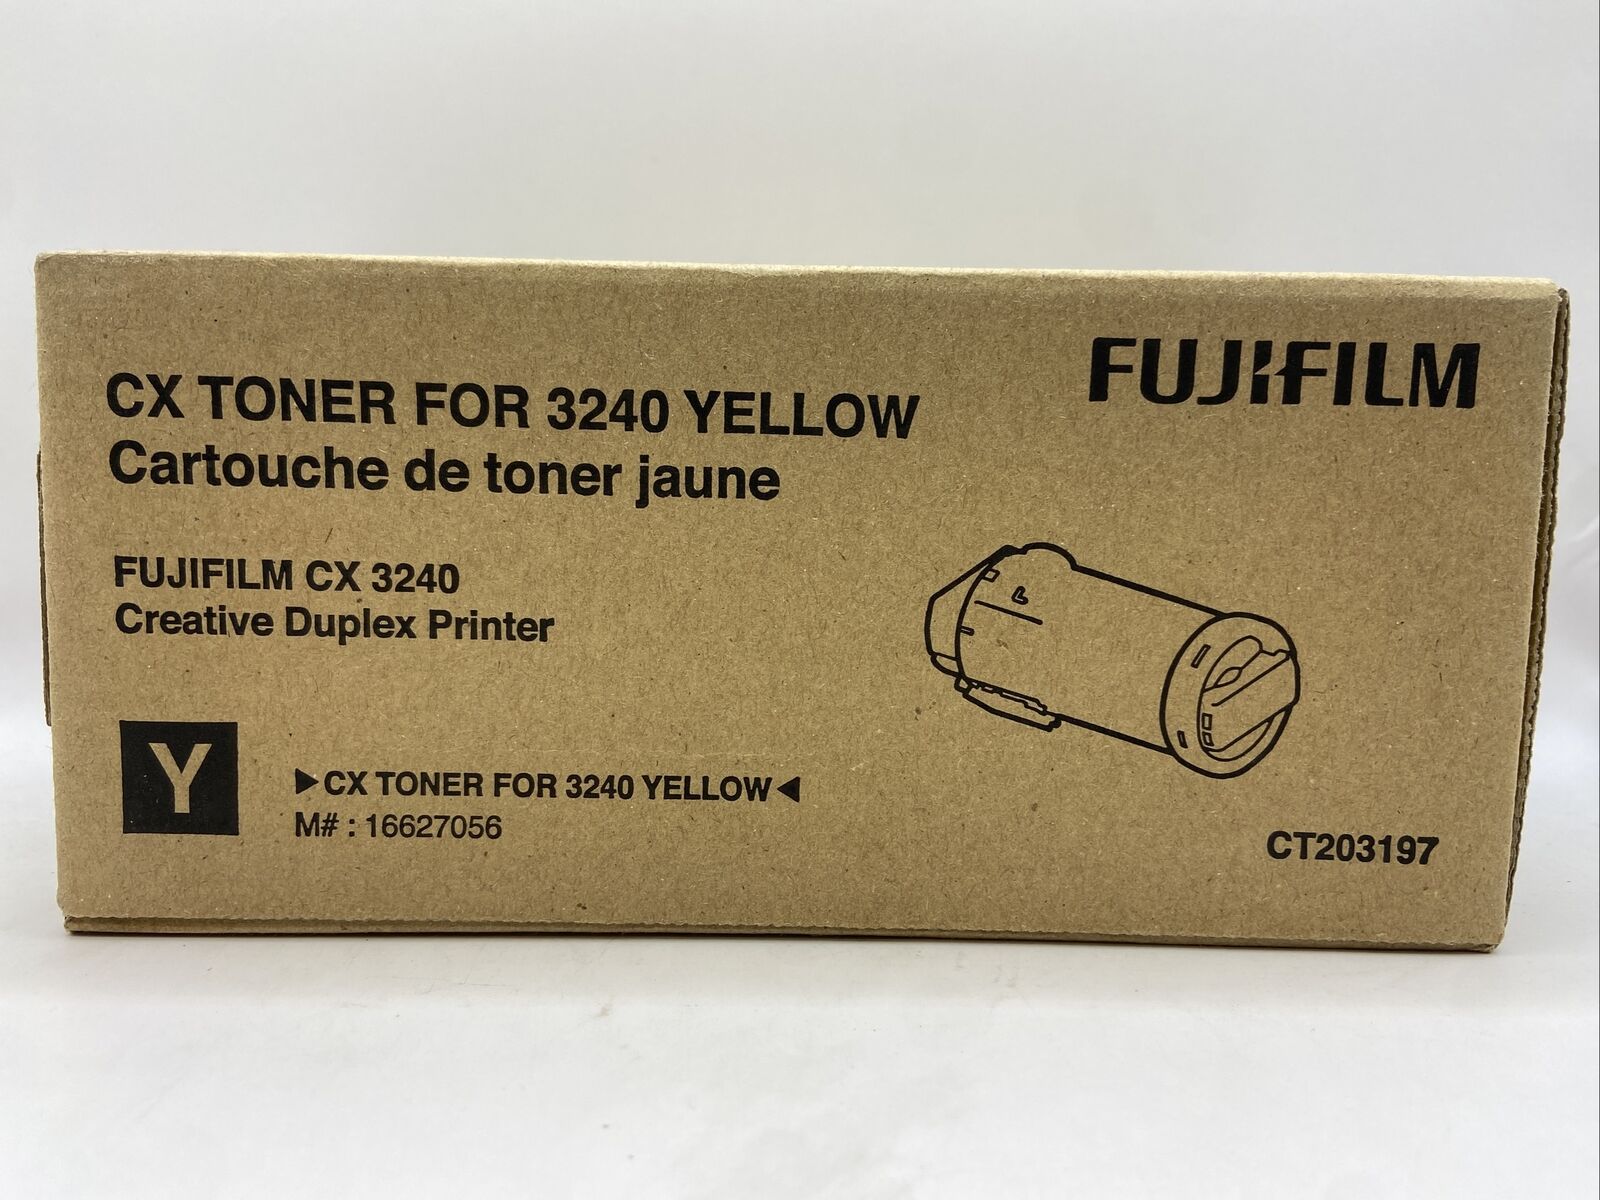 Fujifilm CX Toner For 3240 Yellow, Model CT203197, Brand New